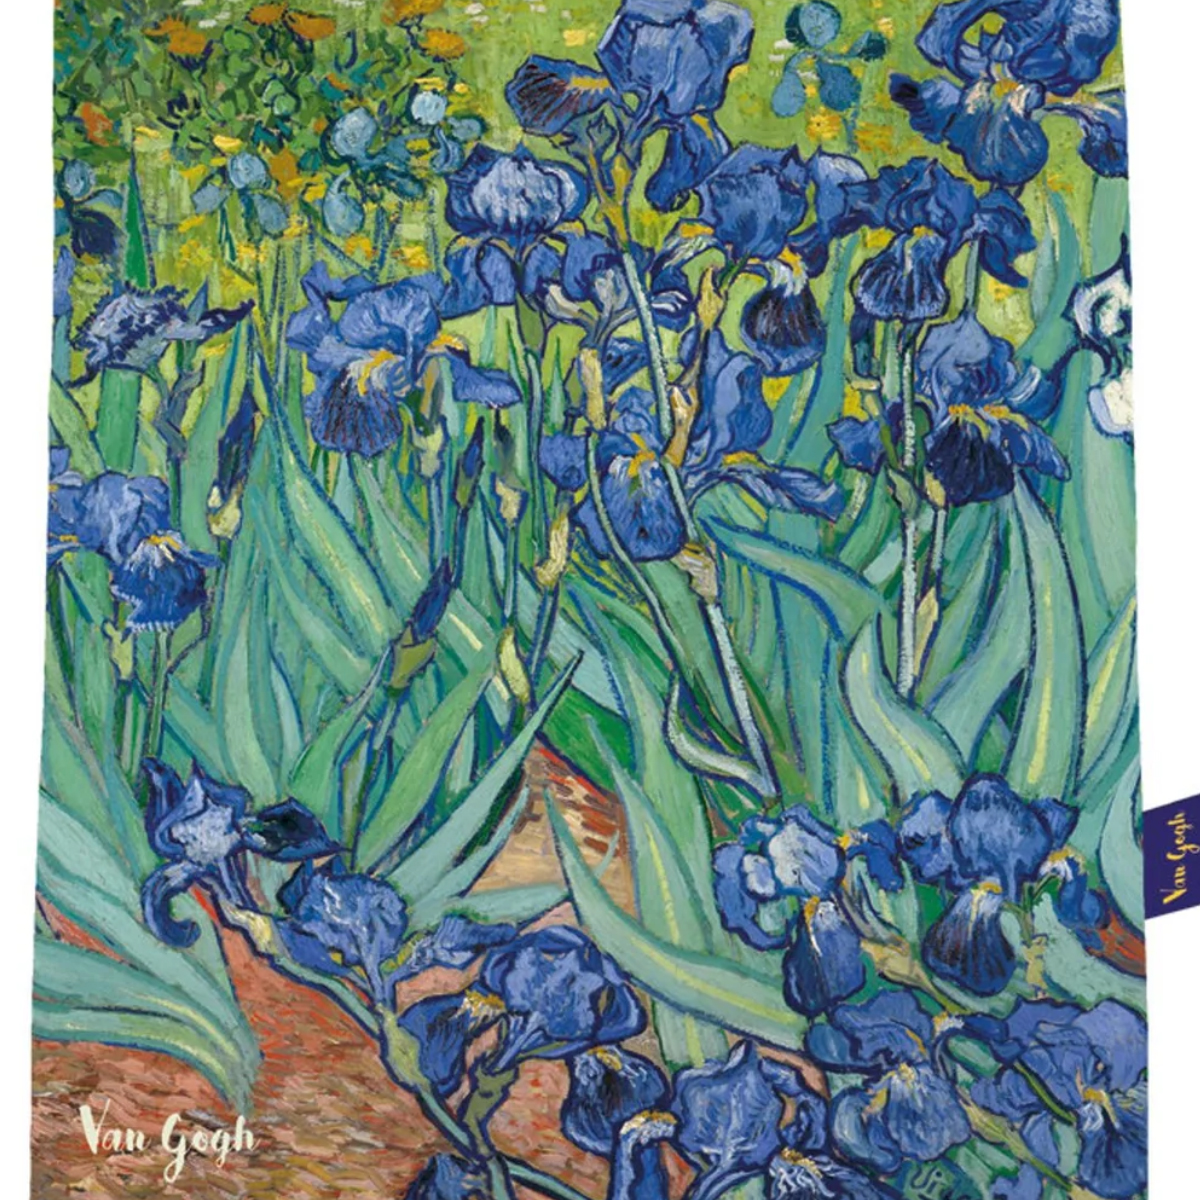 Shopping bag Van Gogh - Irises